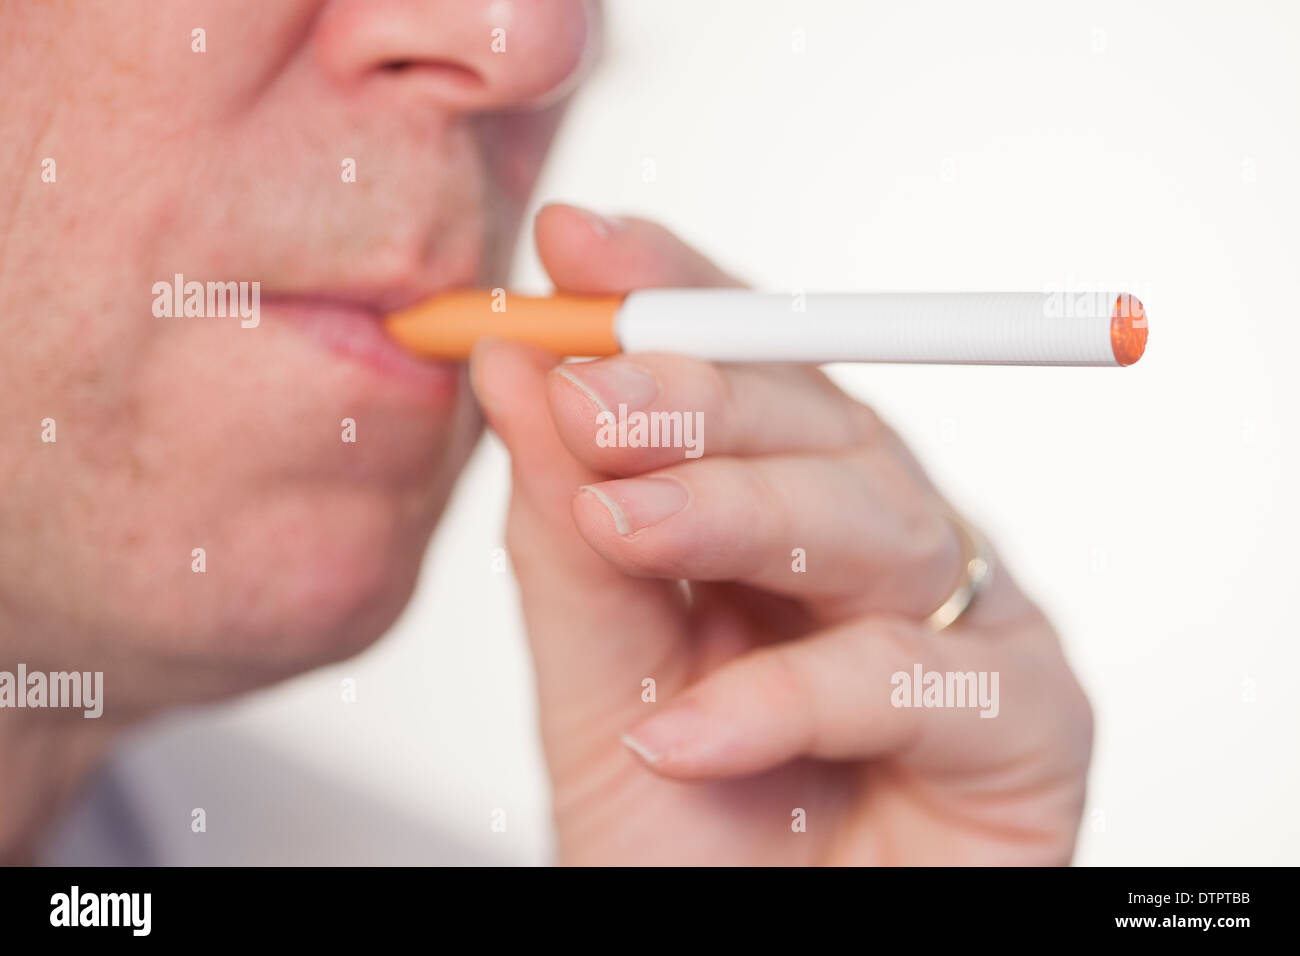 smoking or vaping an E or electronic cigarette Stock Photo